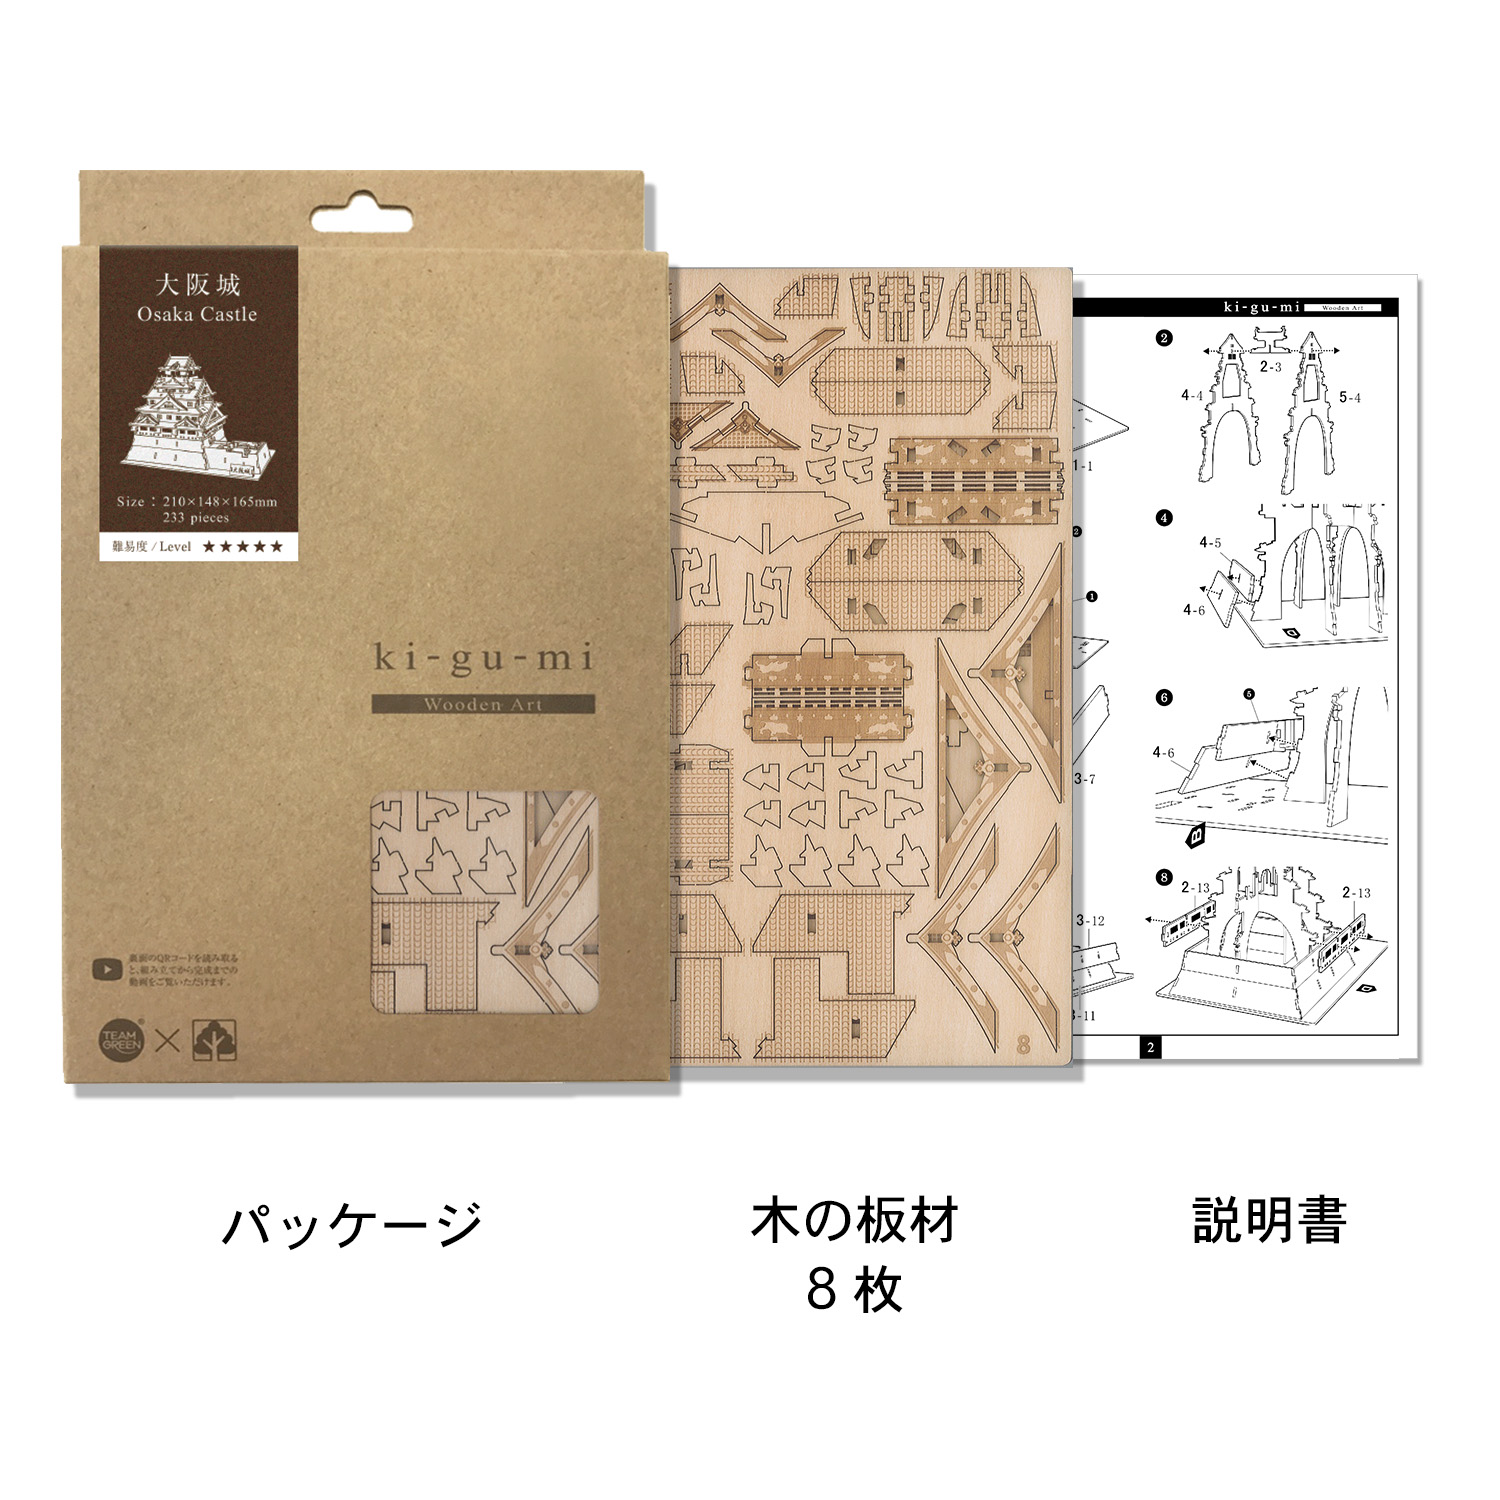 Wooden Art ki-gu-mi 名城 木のおもちゃ 工作キット 上級者向き 送料